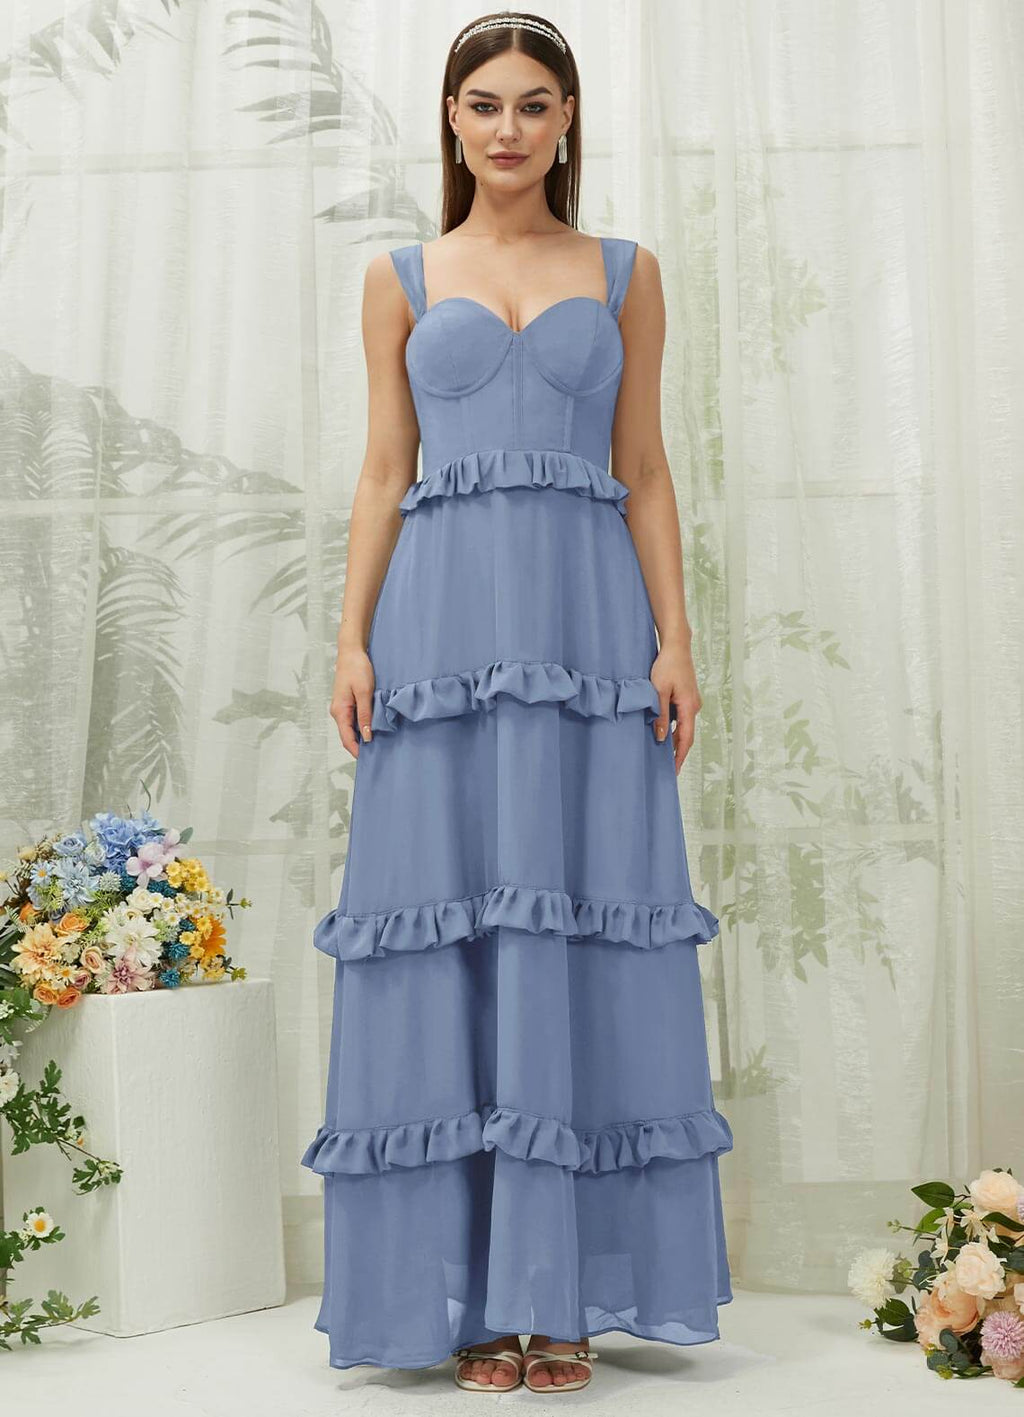 NZ Bridal Slate Blue Straps Sweetheart Chiffon Bridesmaid Dress R3701 Sloane a